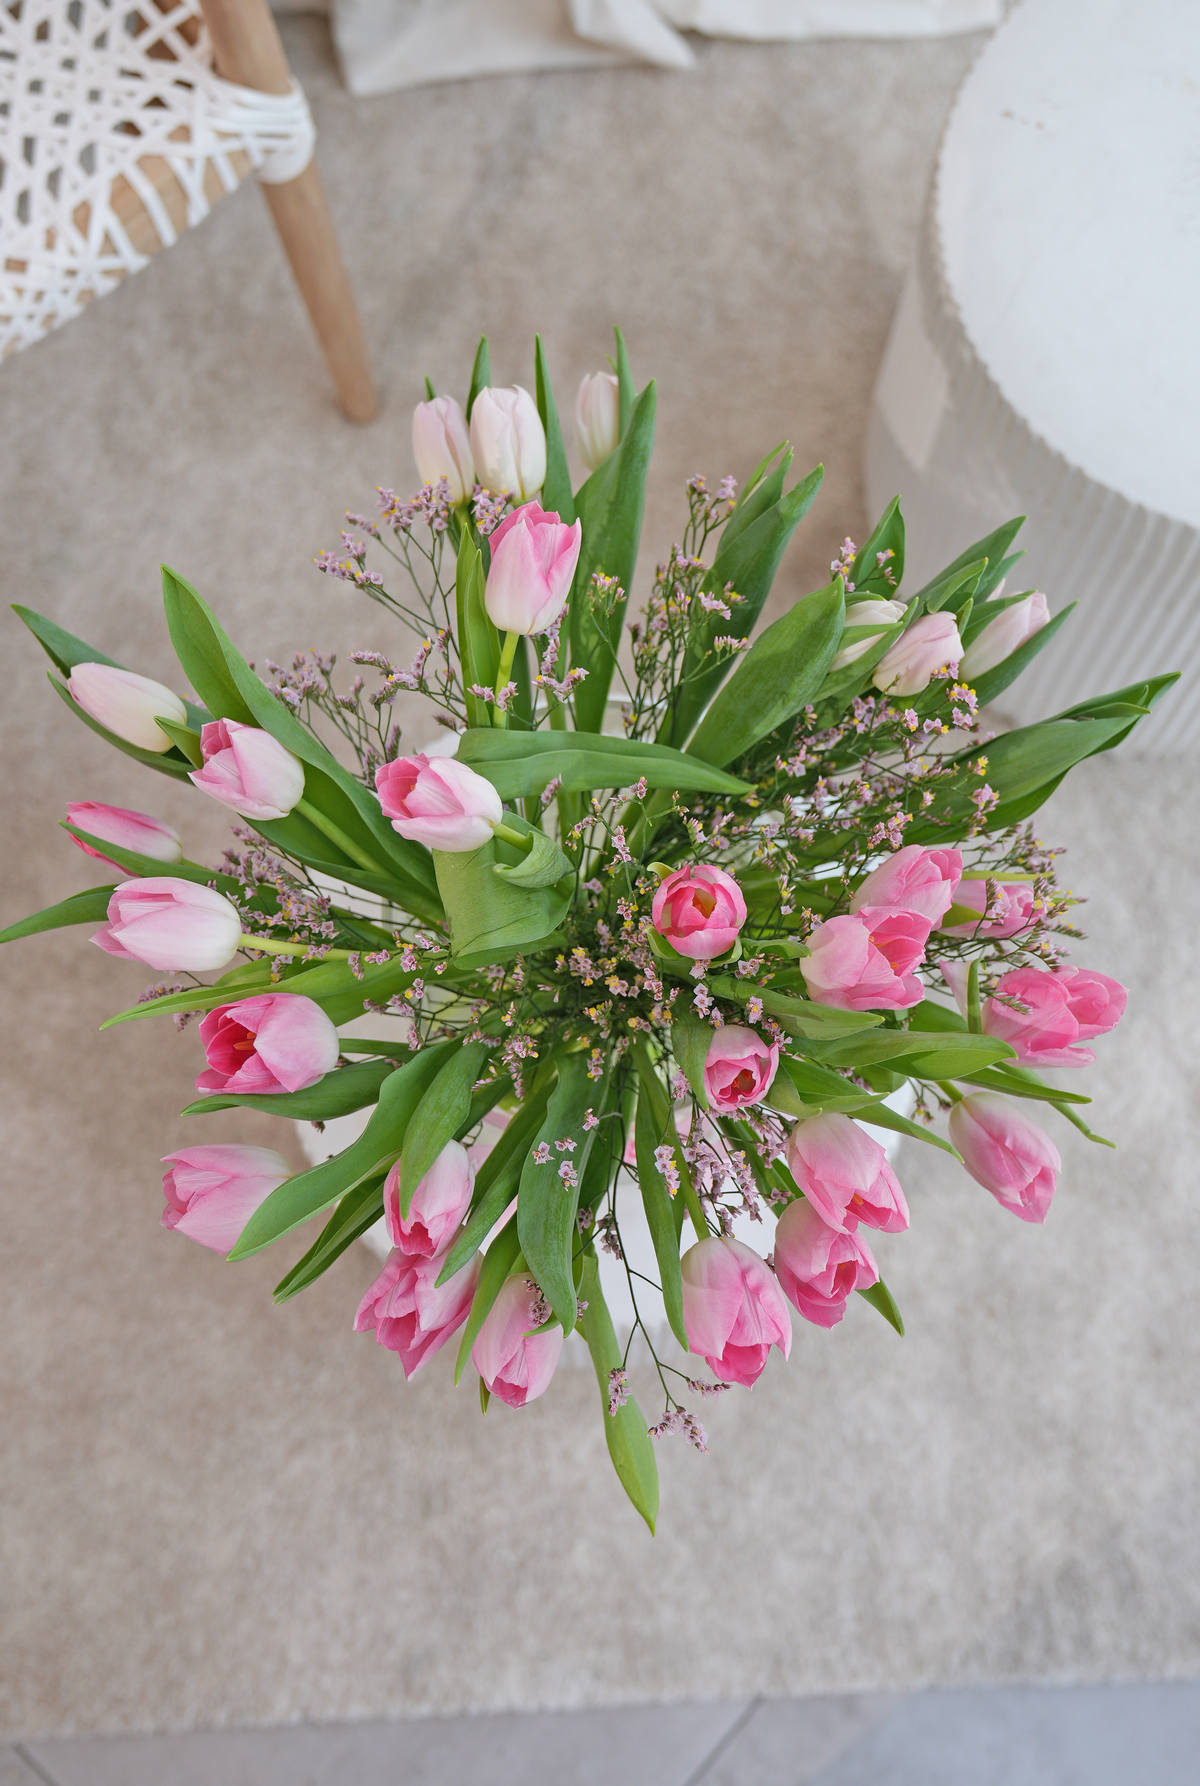 Luxury Pink Tulips - Vase